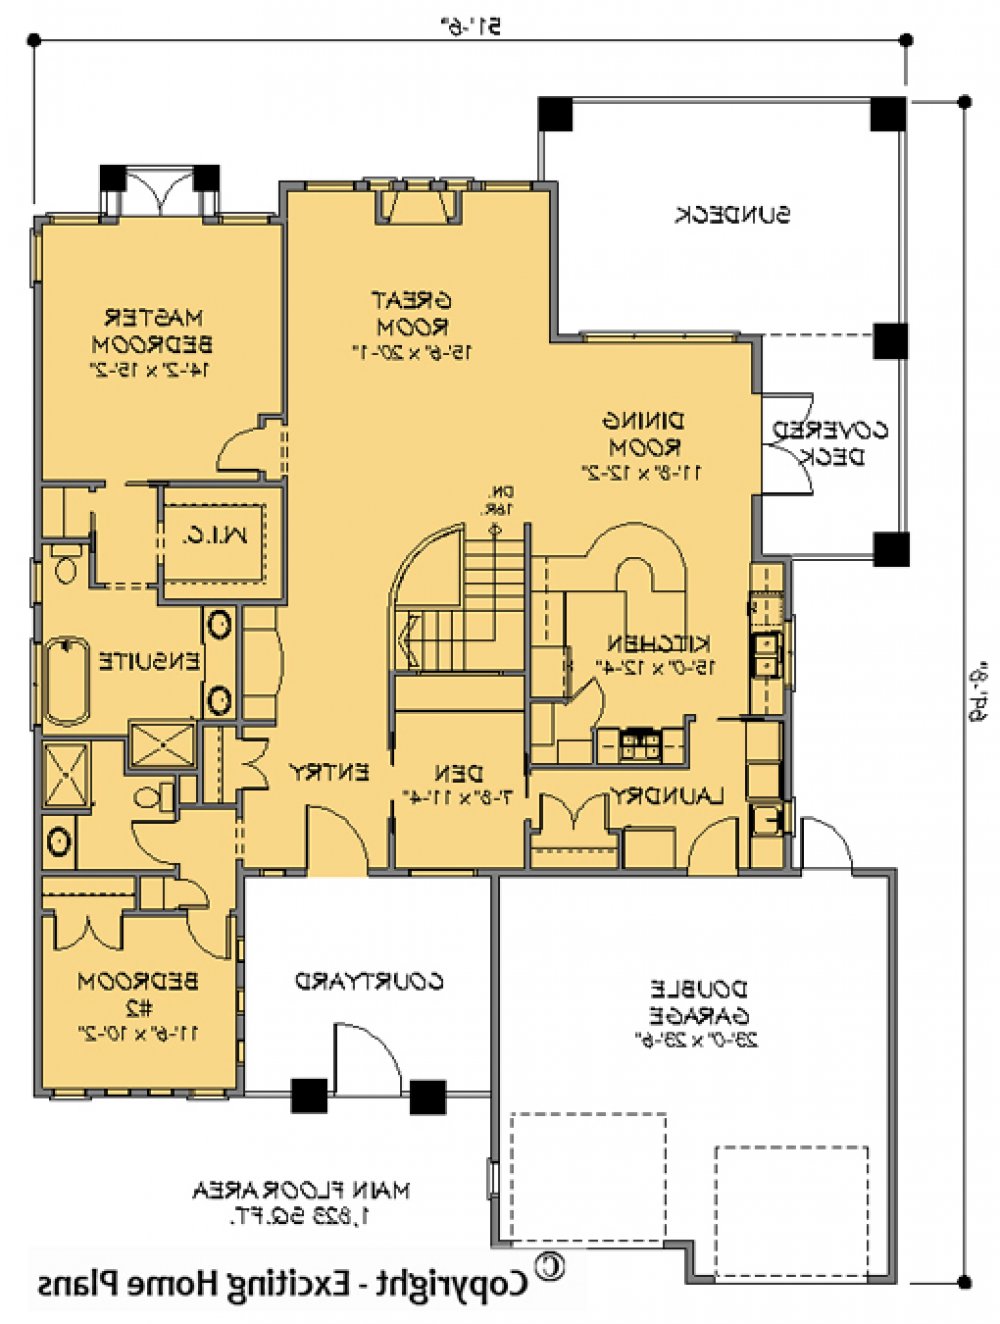 House Plan E1118-10 Main Floor Plan REVERSE